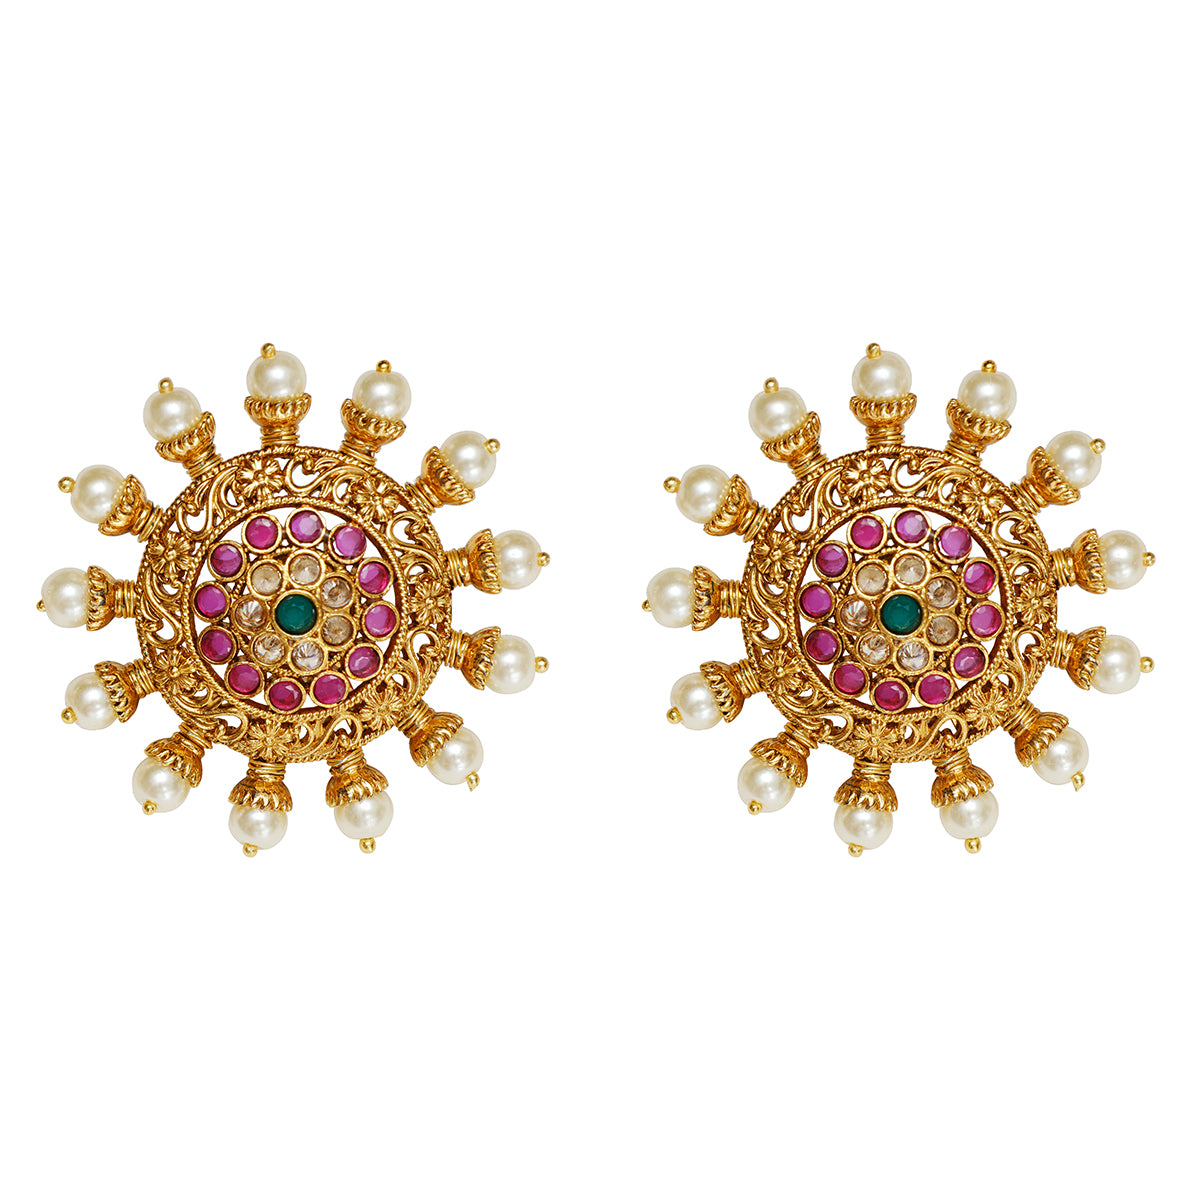 220-Contemporary Seven Stone Diamond Earring Collection | Diamond earrings  design, Gold earrings designs, Gold earrings models